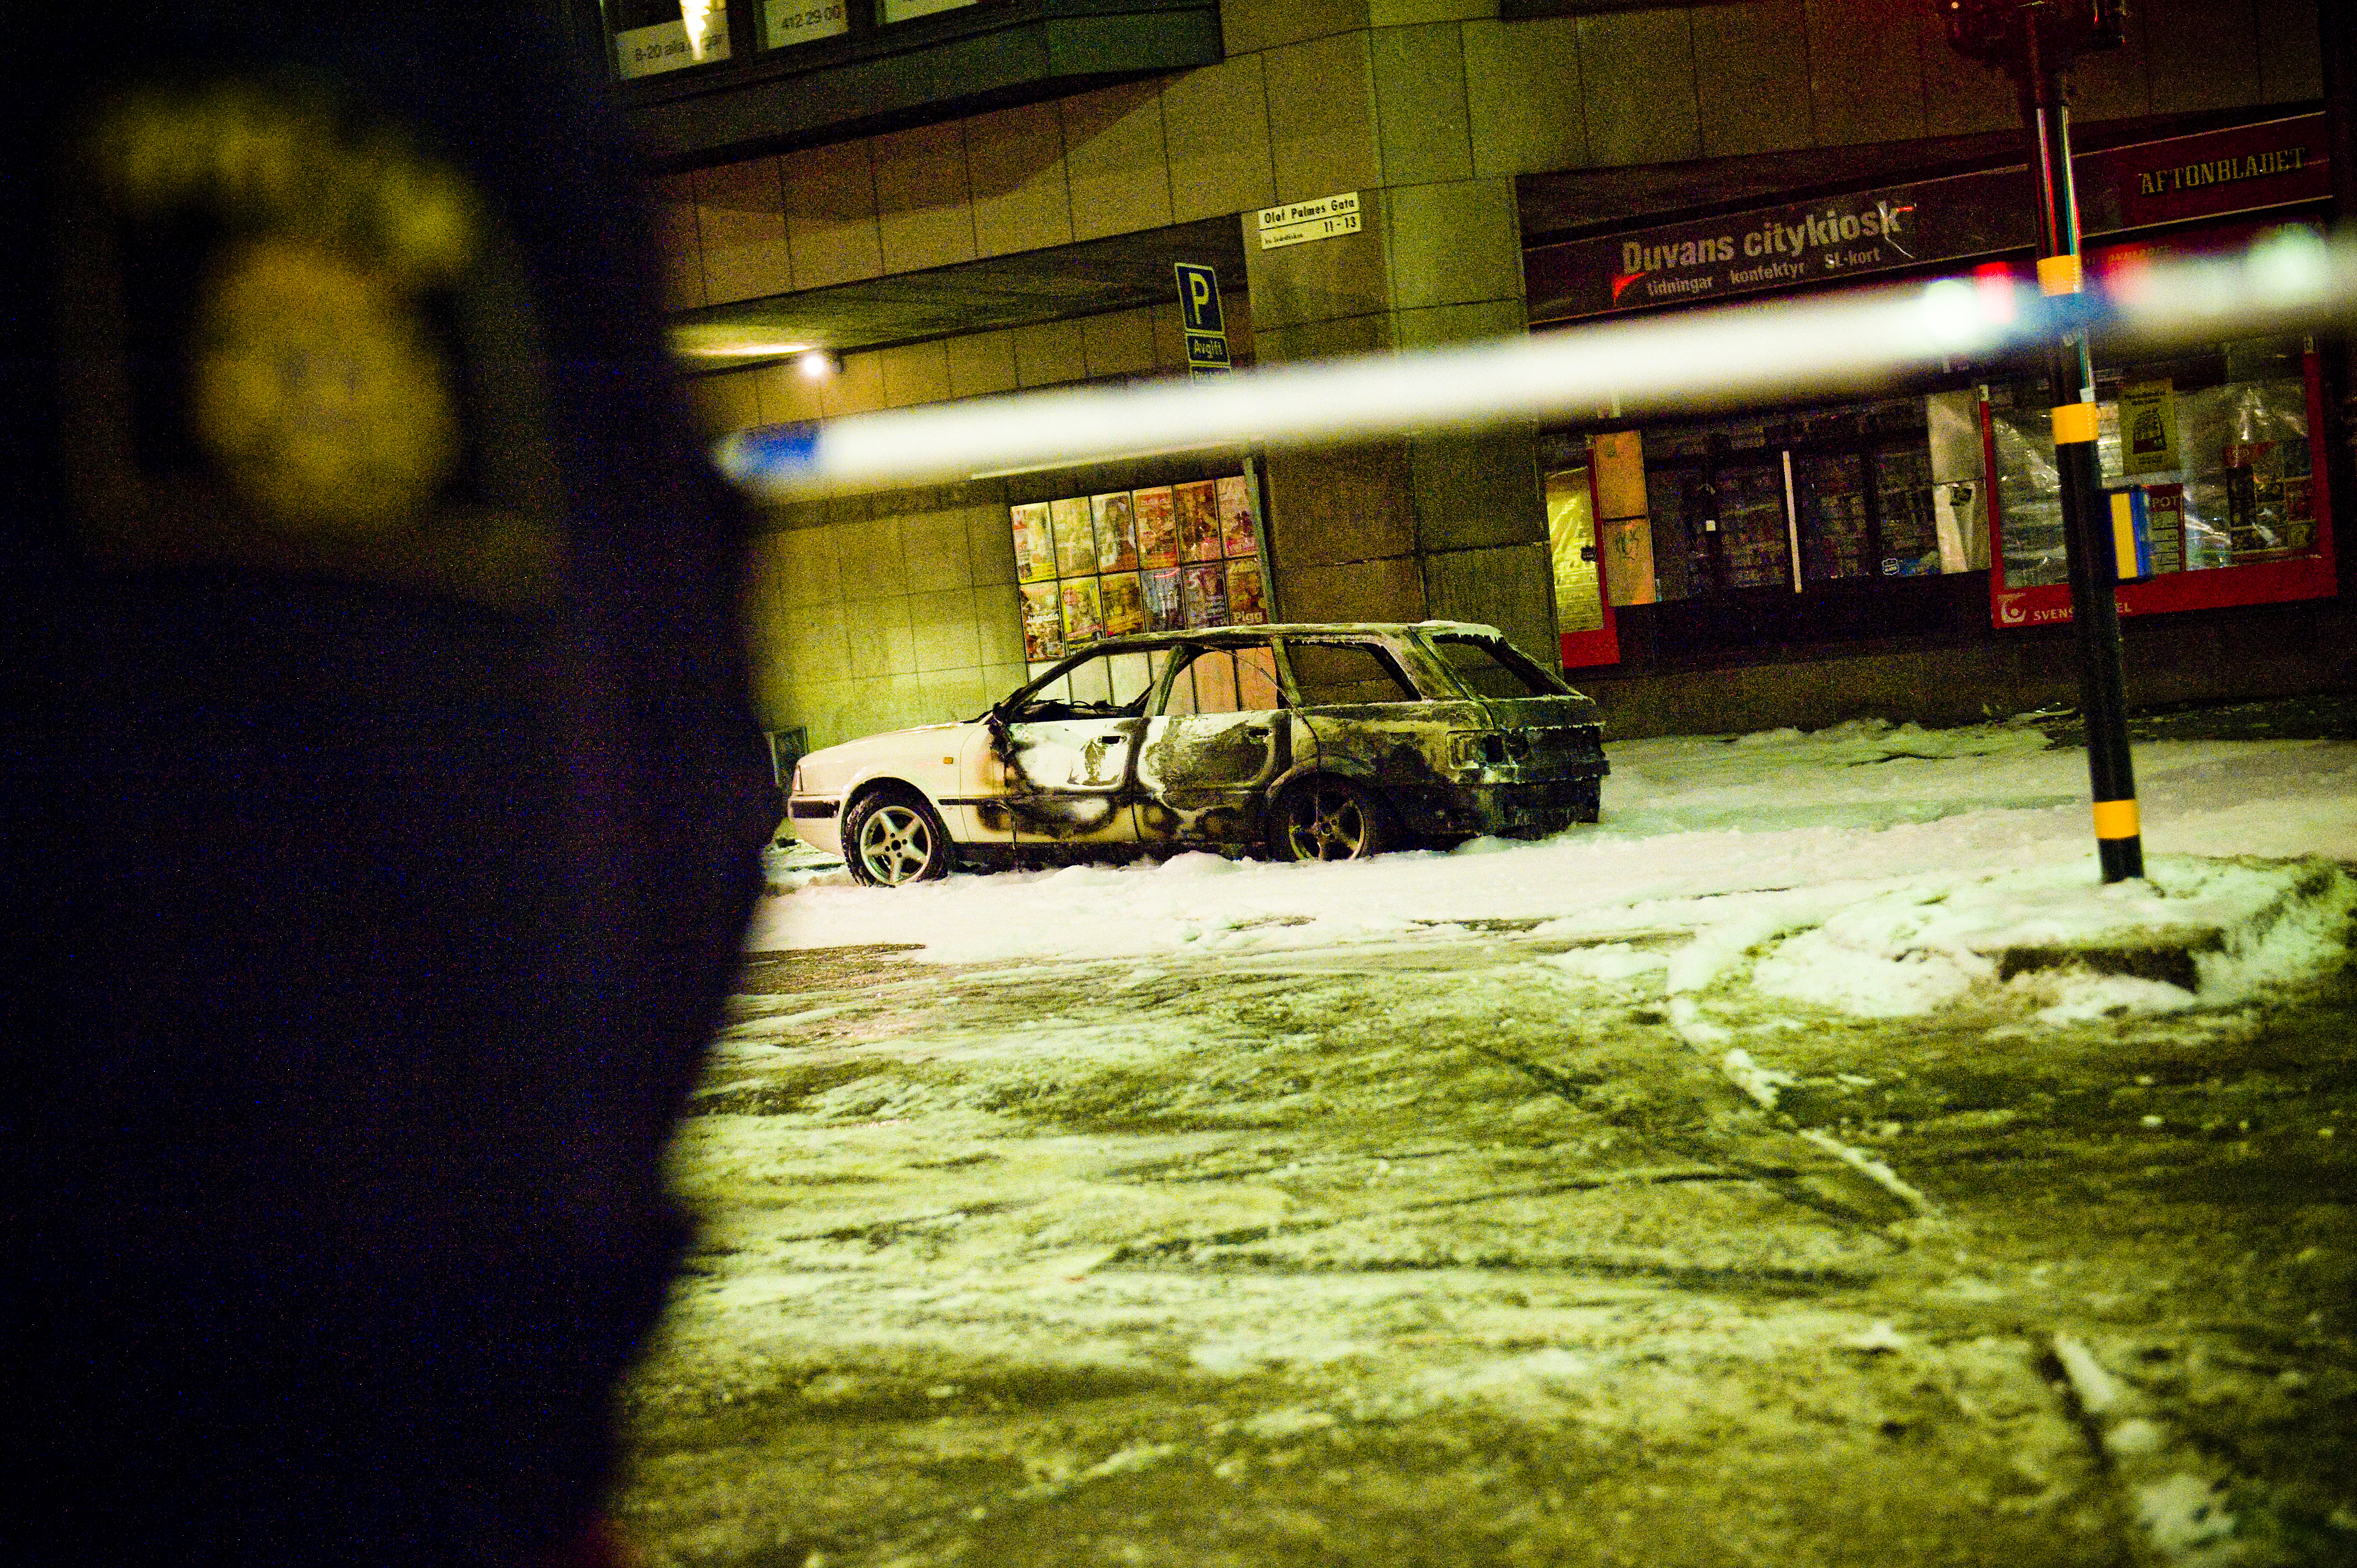 Under julruschen sprängde sig Taimour Abdulwahab till döds mitt i julruschen i Stockholms innerstad.